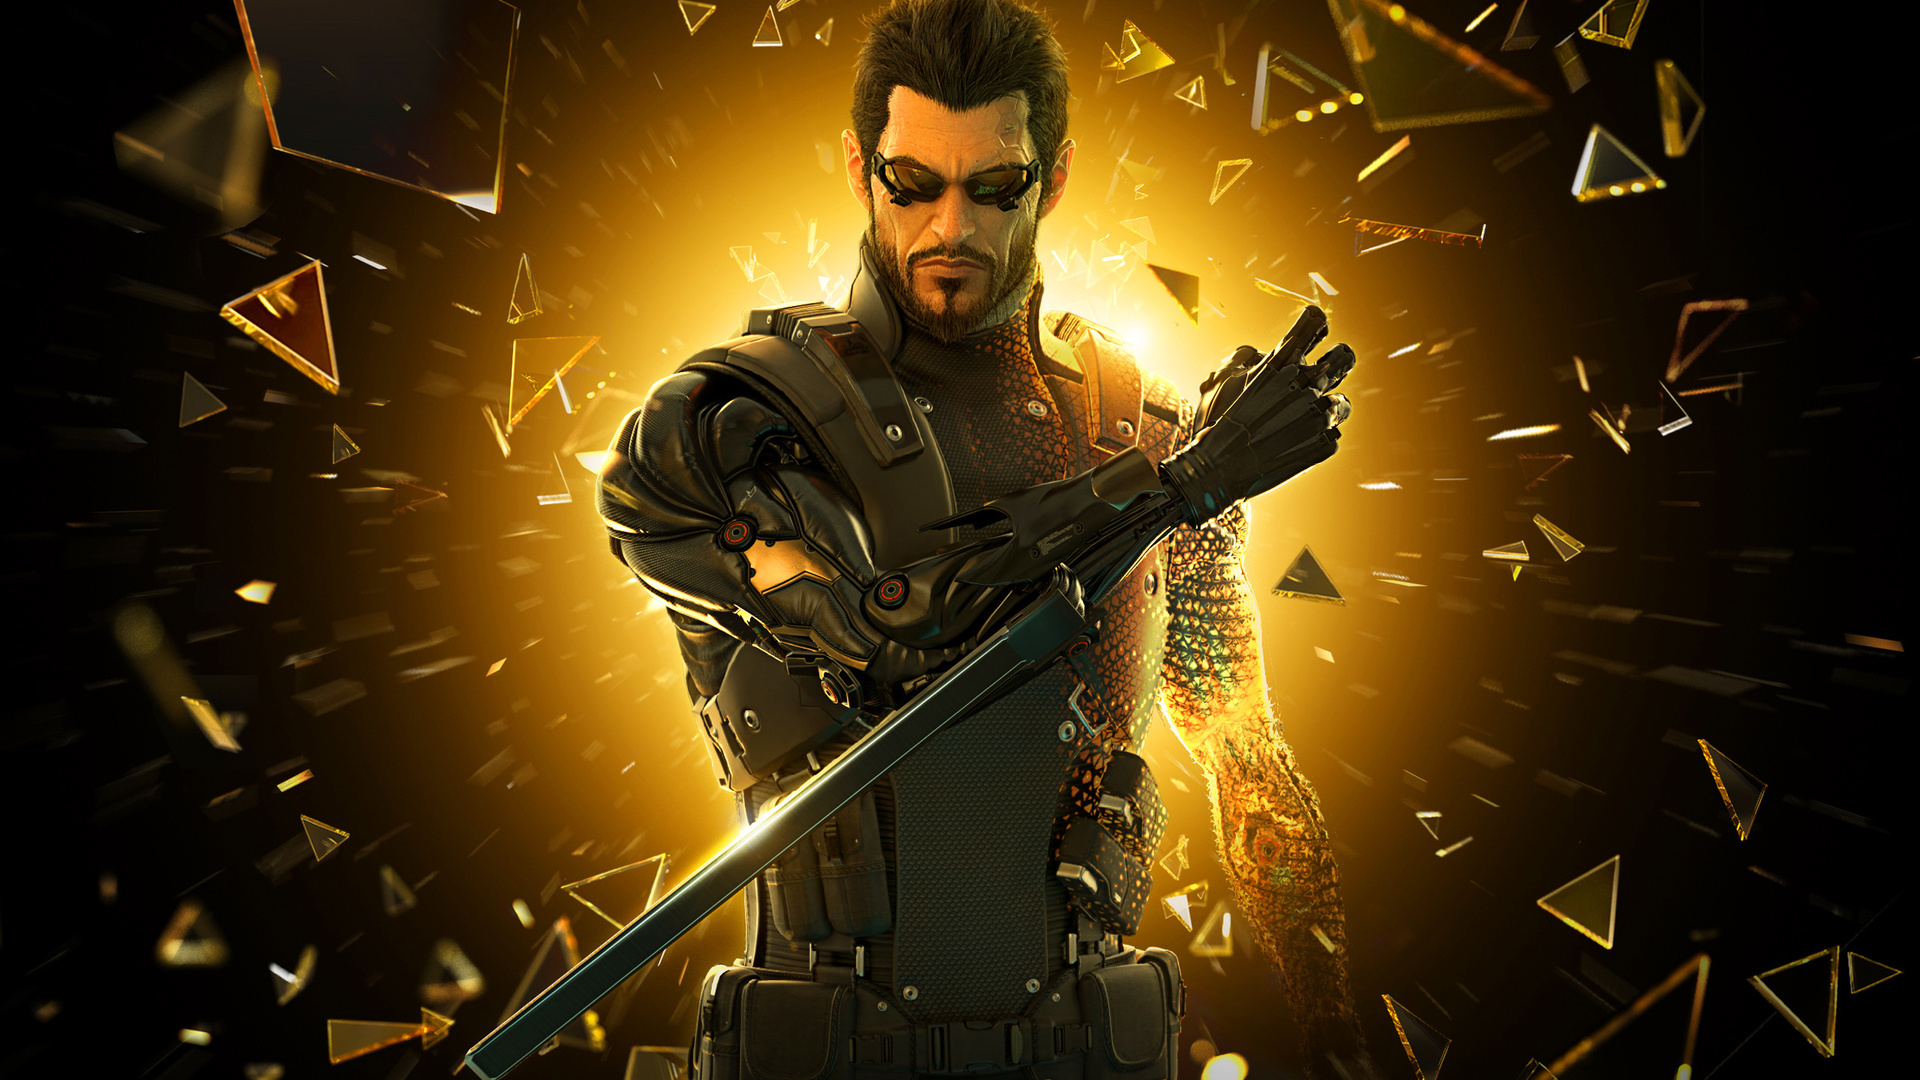 Amazing Deus Ex: Human Revolution Pictures & Backgrounds